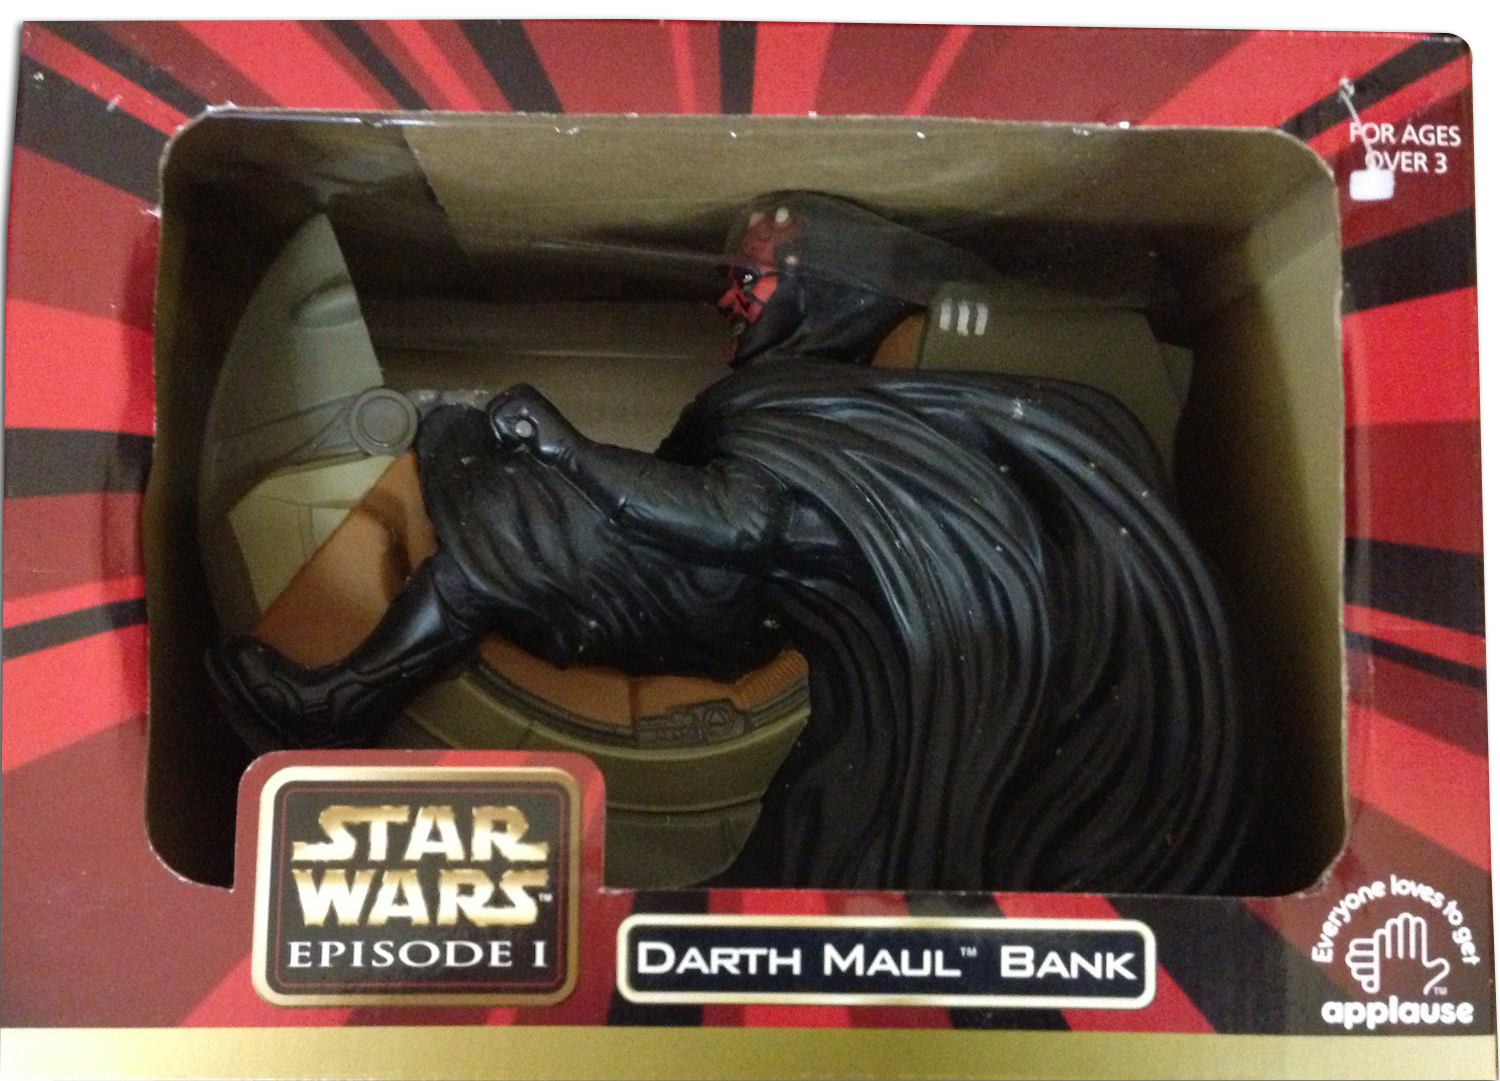 Inside Original Packaging Star Wars Episode 1 Darth Maul Riding His Sith Speeder Piggy Bank